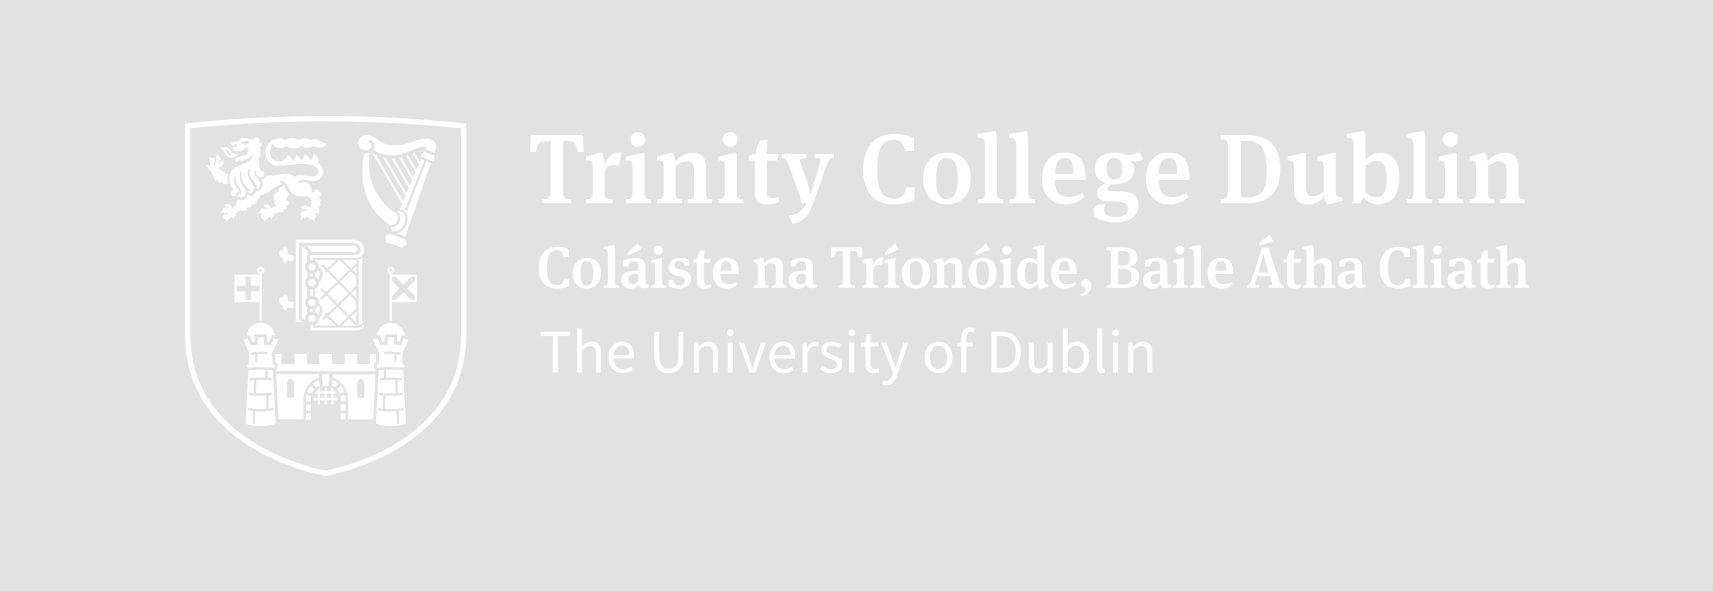 TCD Logo - Identity - Trinity College Dublin